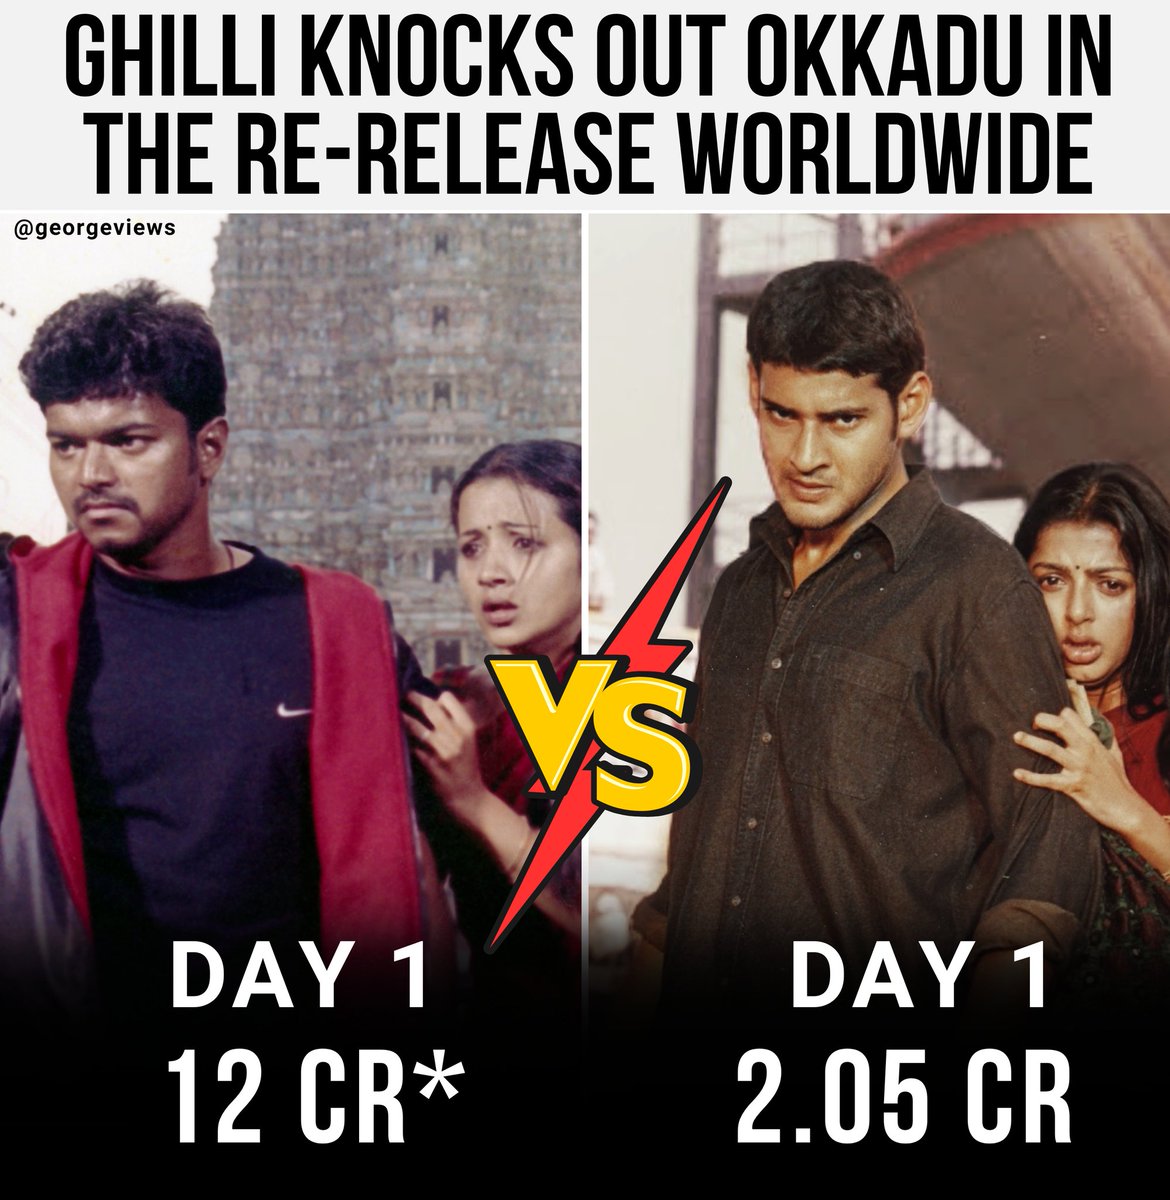 #Ghilli is the clear winner against #Okkadu in re-release too! 🔥
#ThalapathyVijay #MaheshBabu

@actorvijay #LEO #TheGreateatOfAllTime